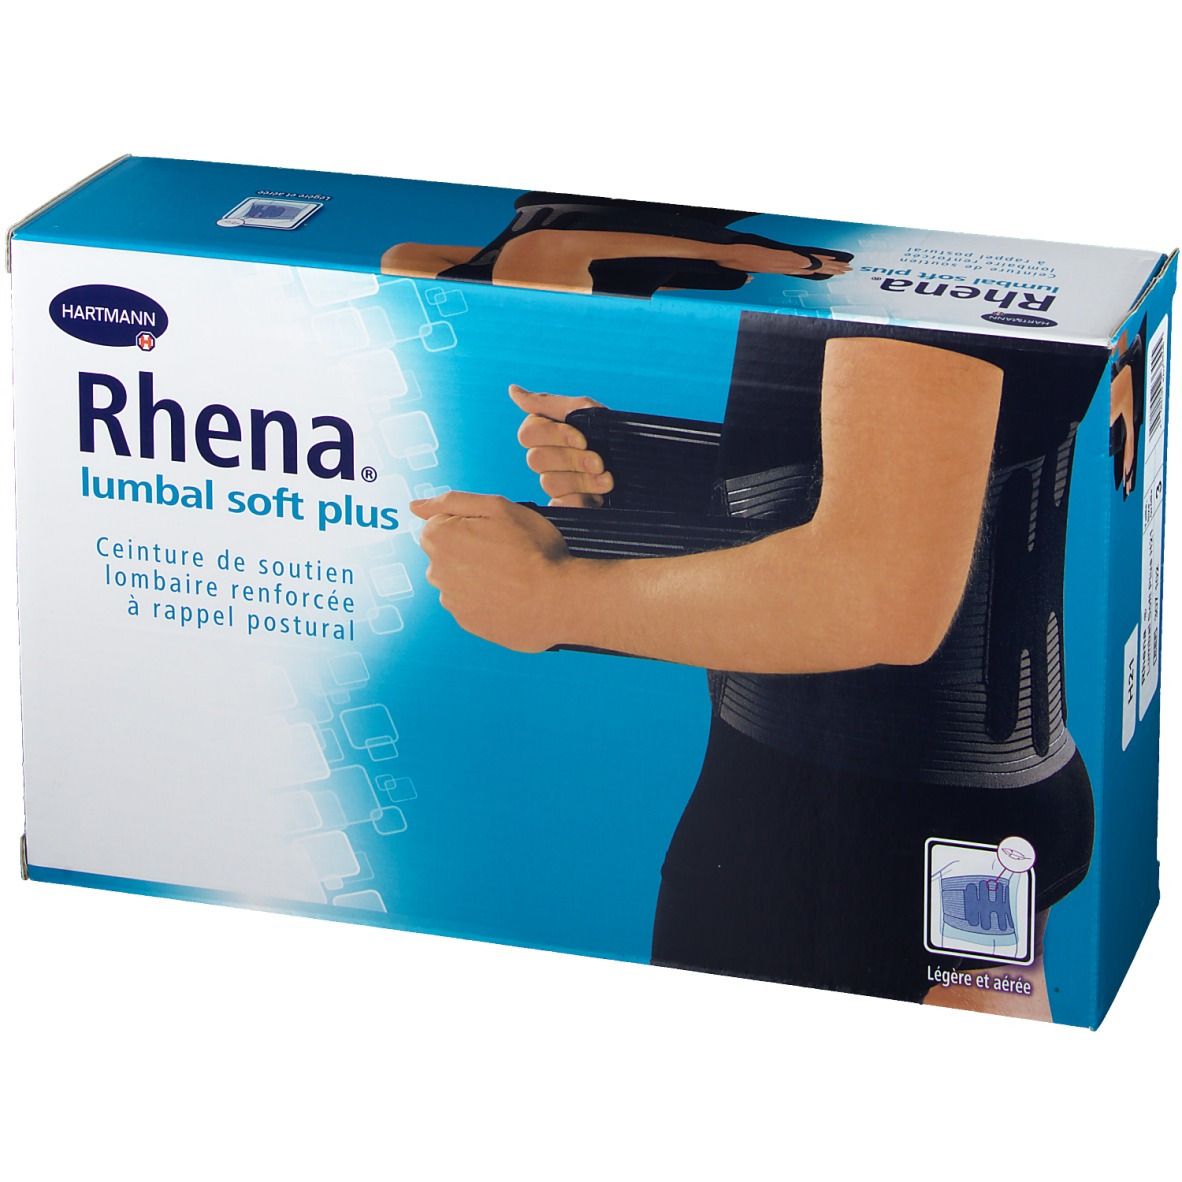 Rhena® lumbal soft plus Taille 3 H21